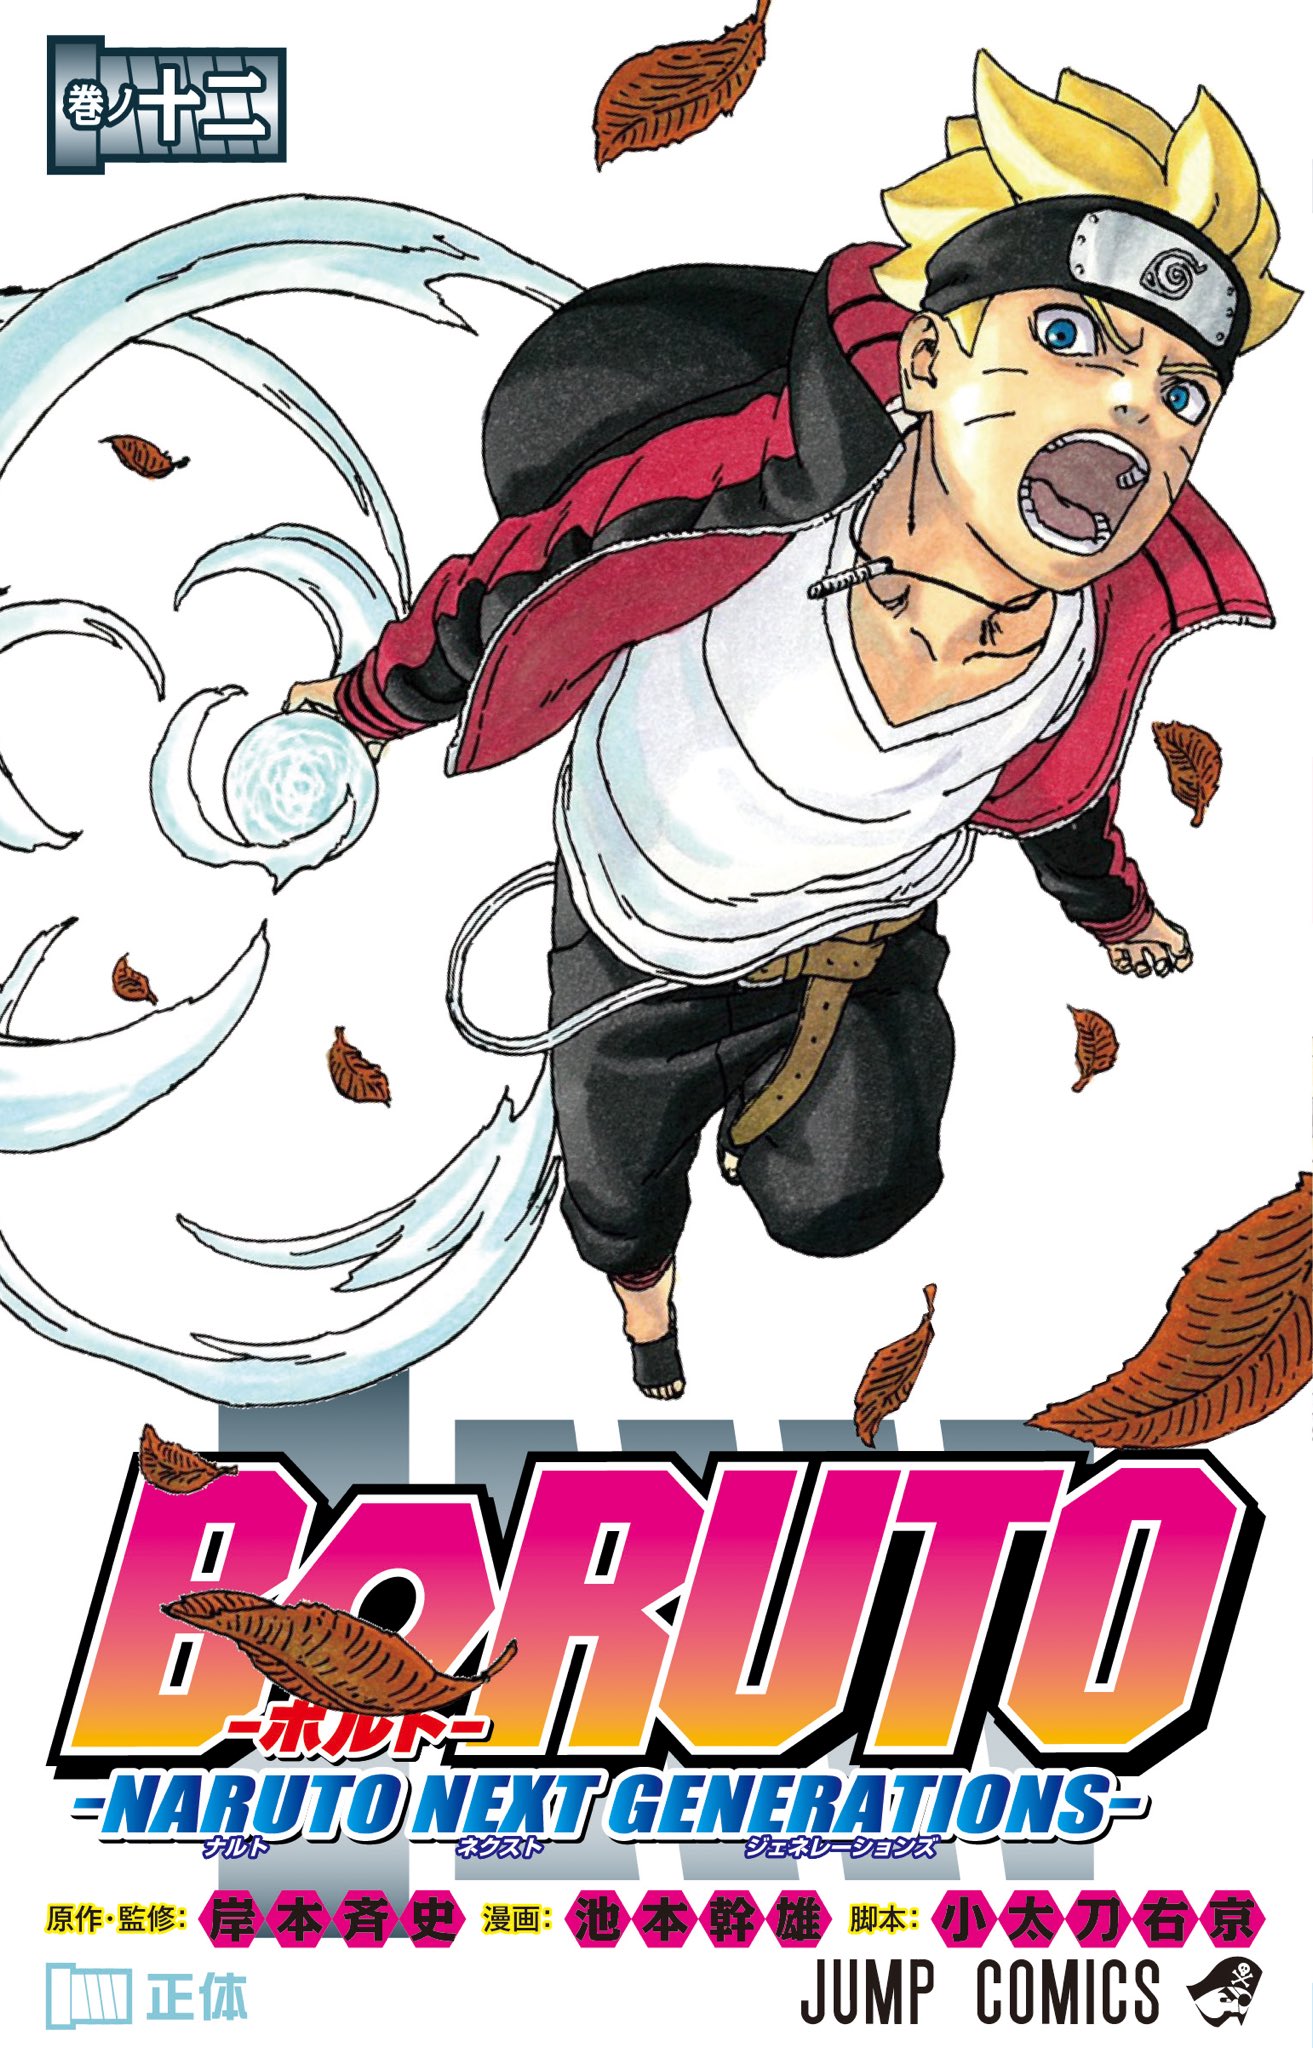 توییتر Naruto Boruto 原作公式 در توییتر Jc Boruto 最新12巻は9 4発売予定 カバーイラストはこちら 螺旋丸を放つボルトが目印 果心居士とアマドが 殻 を離反 アマドが突如木ノ葉に現れて ボルトは自らに刻まれた 運命 の真実を知る 物語の